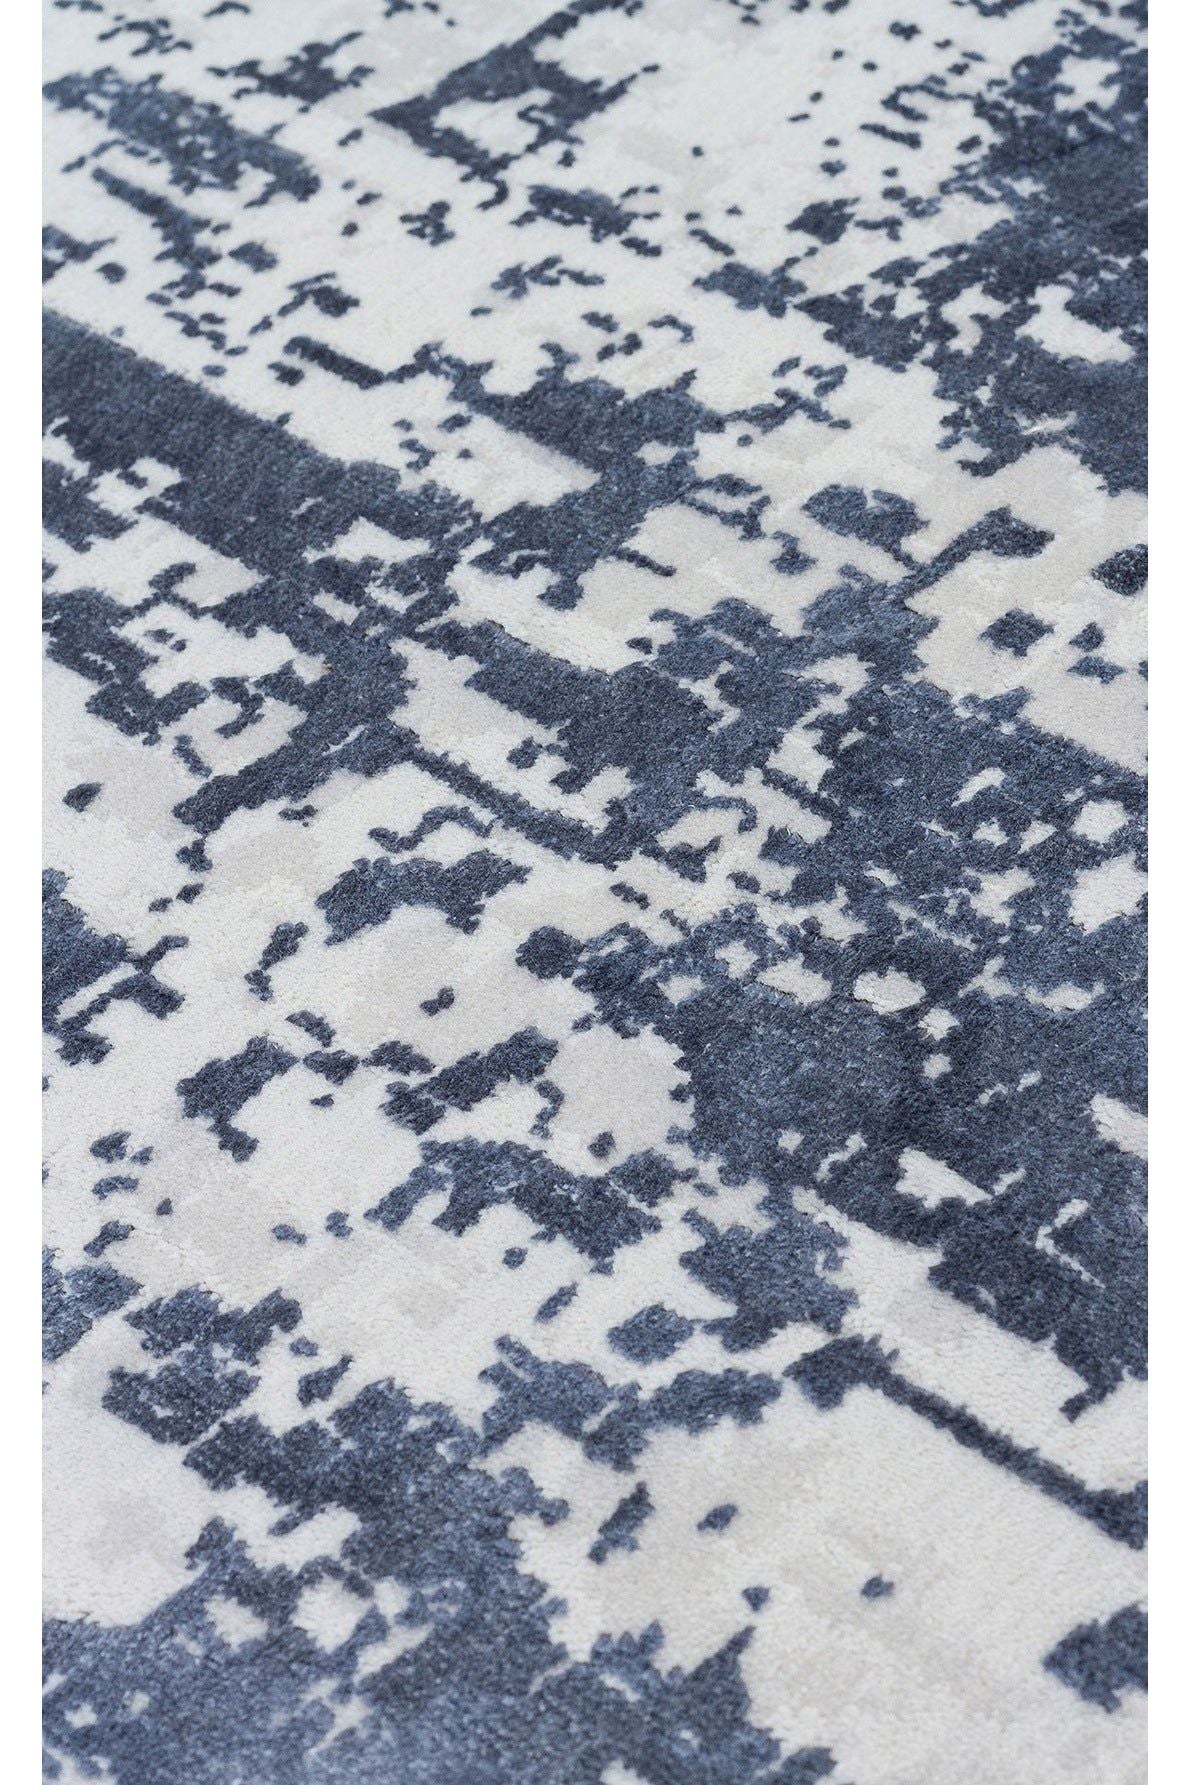 #Turkish_Carpets_Rugs# #Modern_Carpets# #Abrash_Carpets#Db 01 Denim Nw